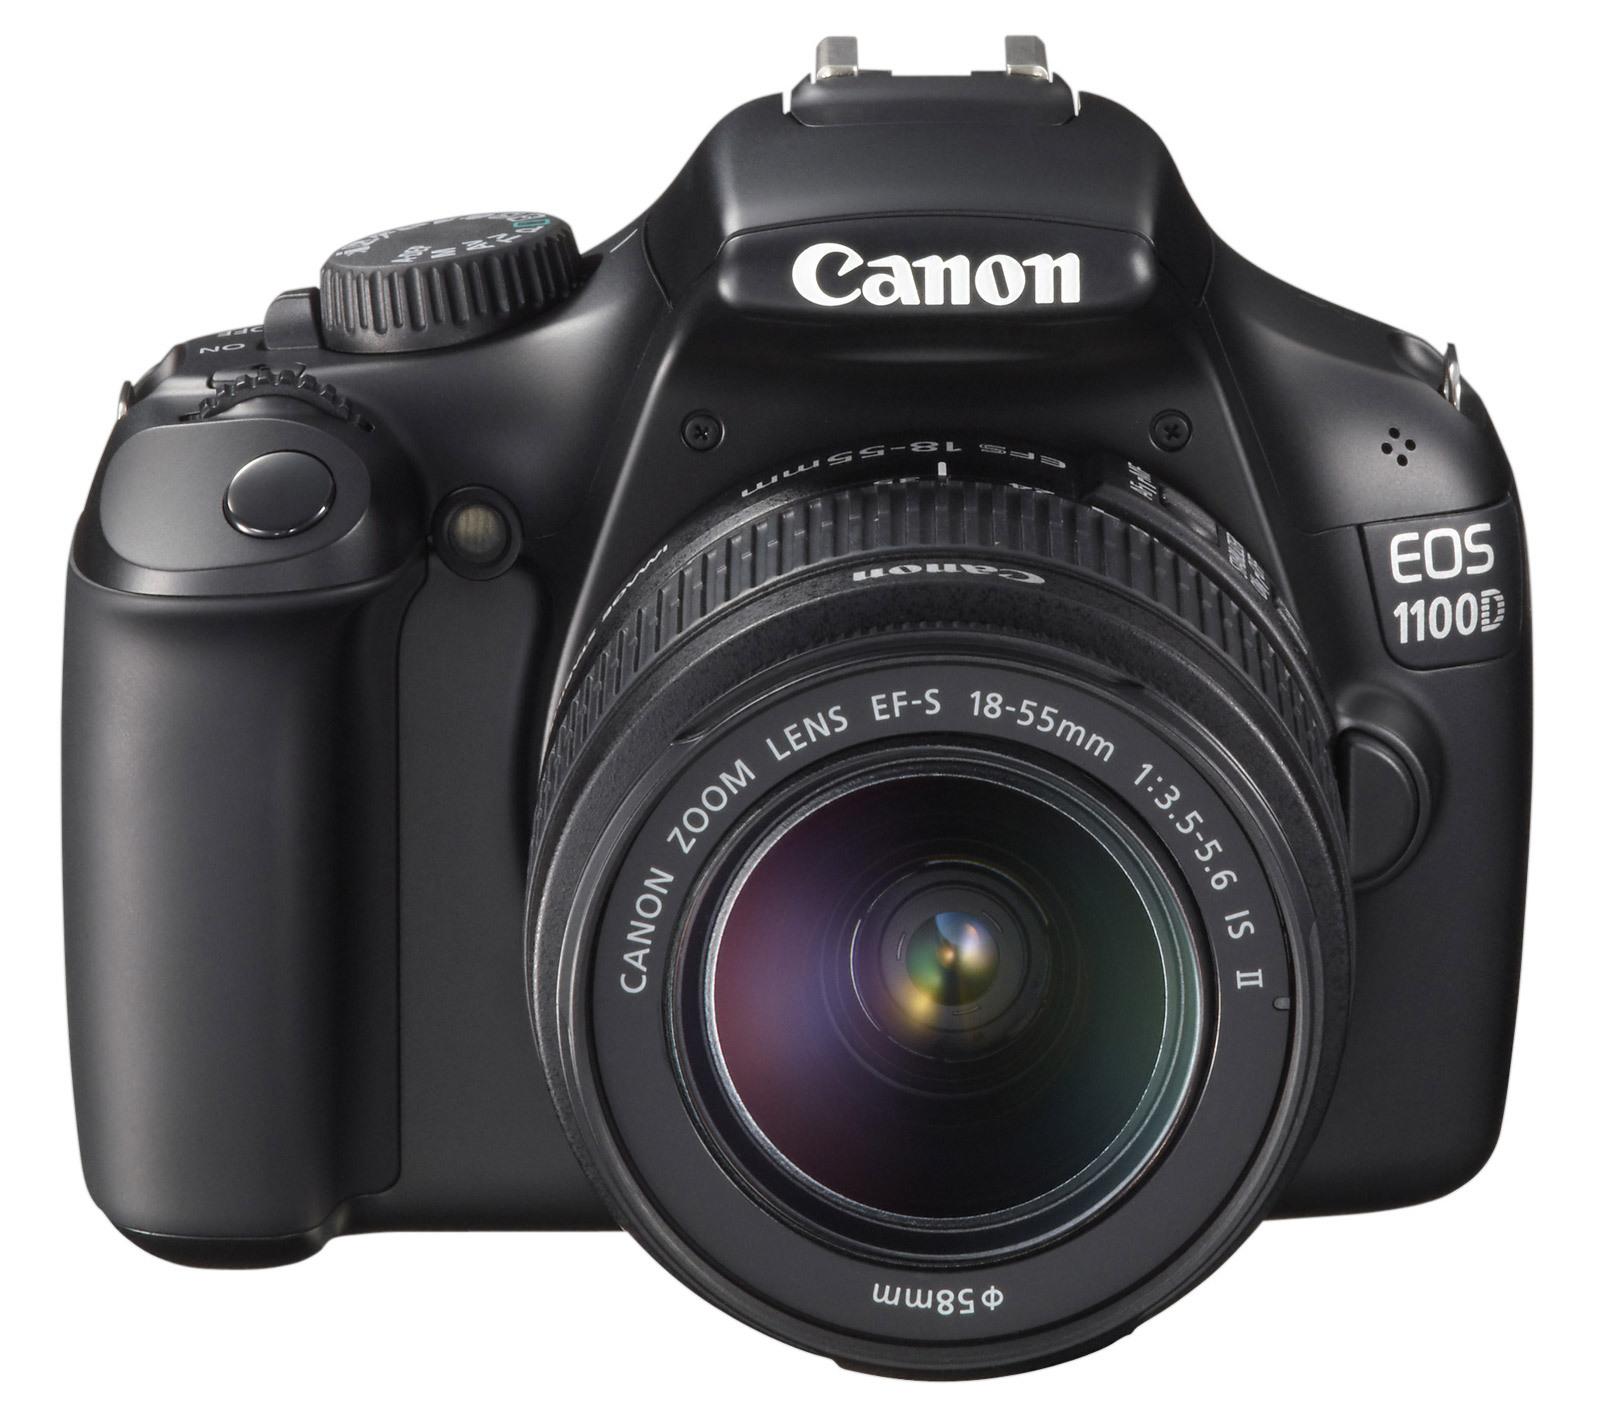 Foto Canon 1100d + ef-s 18-55mm eos, 12.2 mp, slr kit, cmos, 4272 x